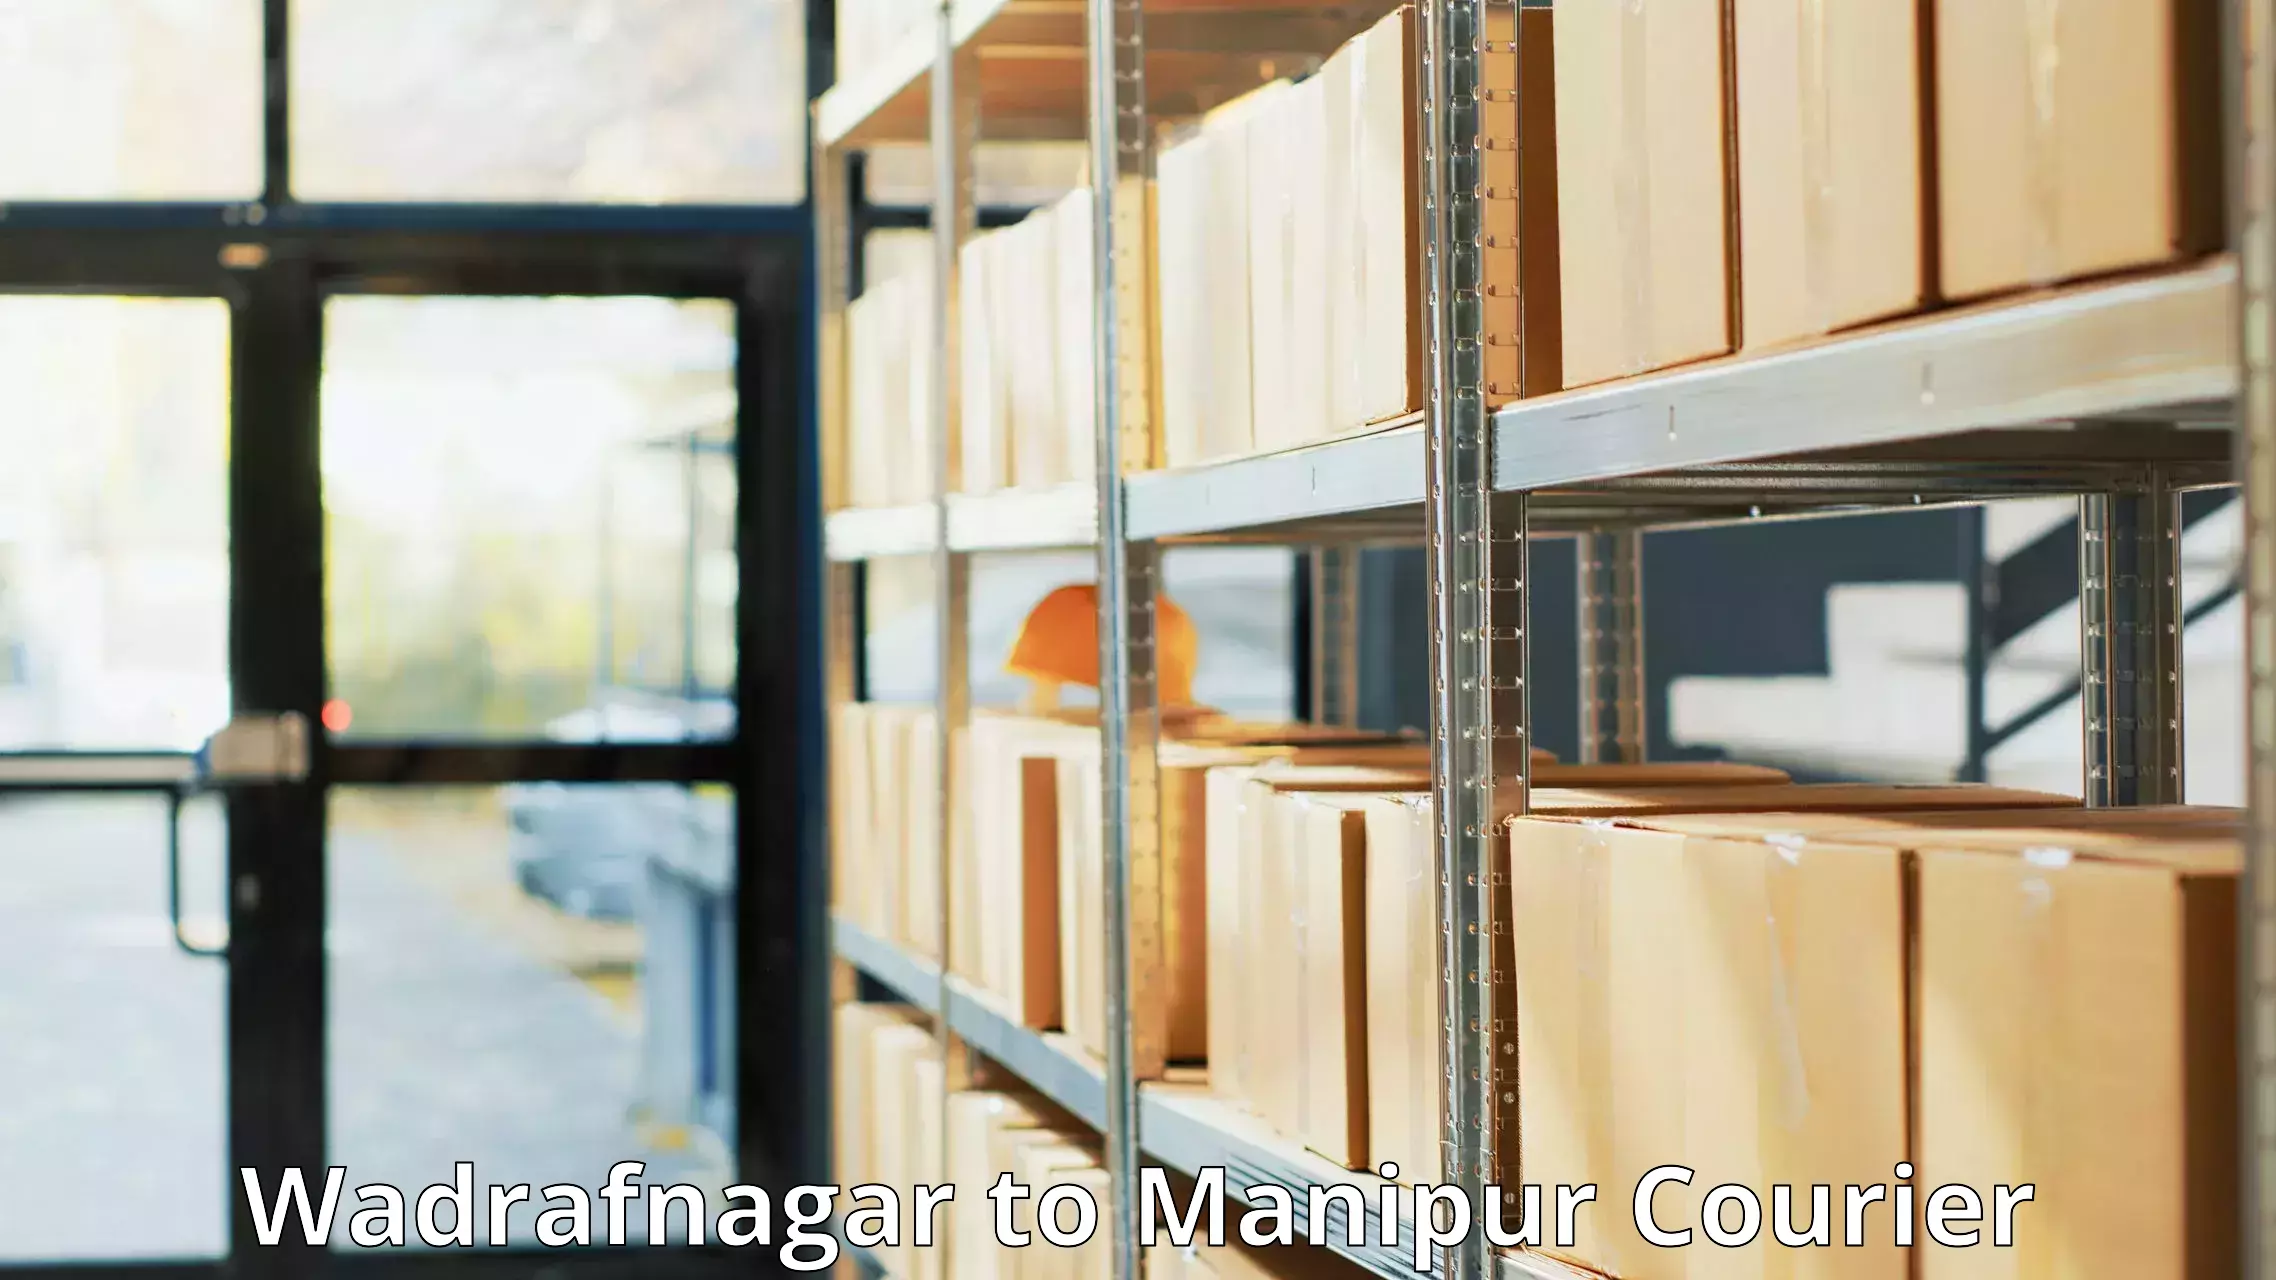 24-hour courier service Wadrafnagar to Senapati